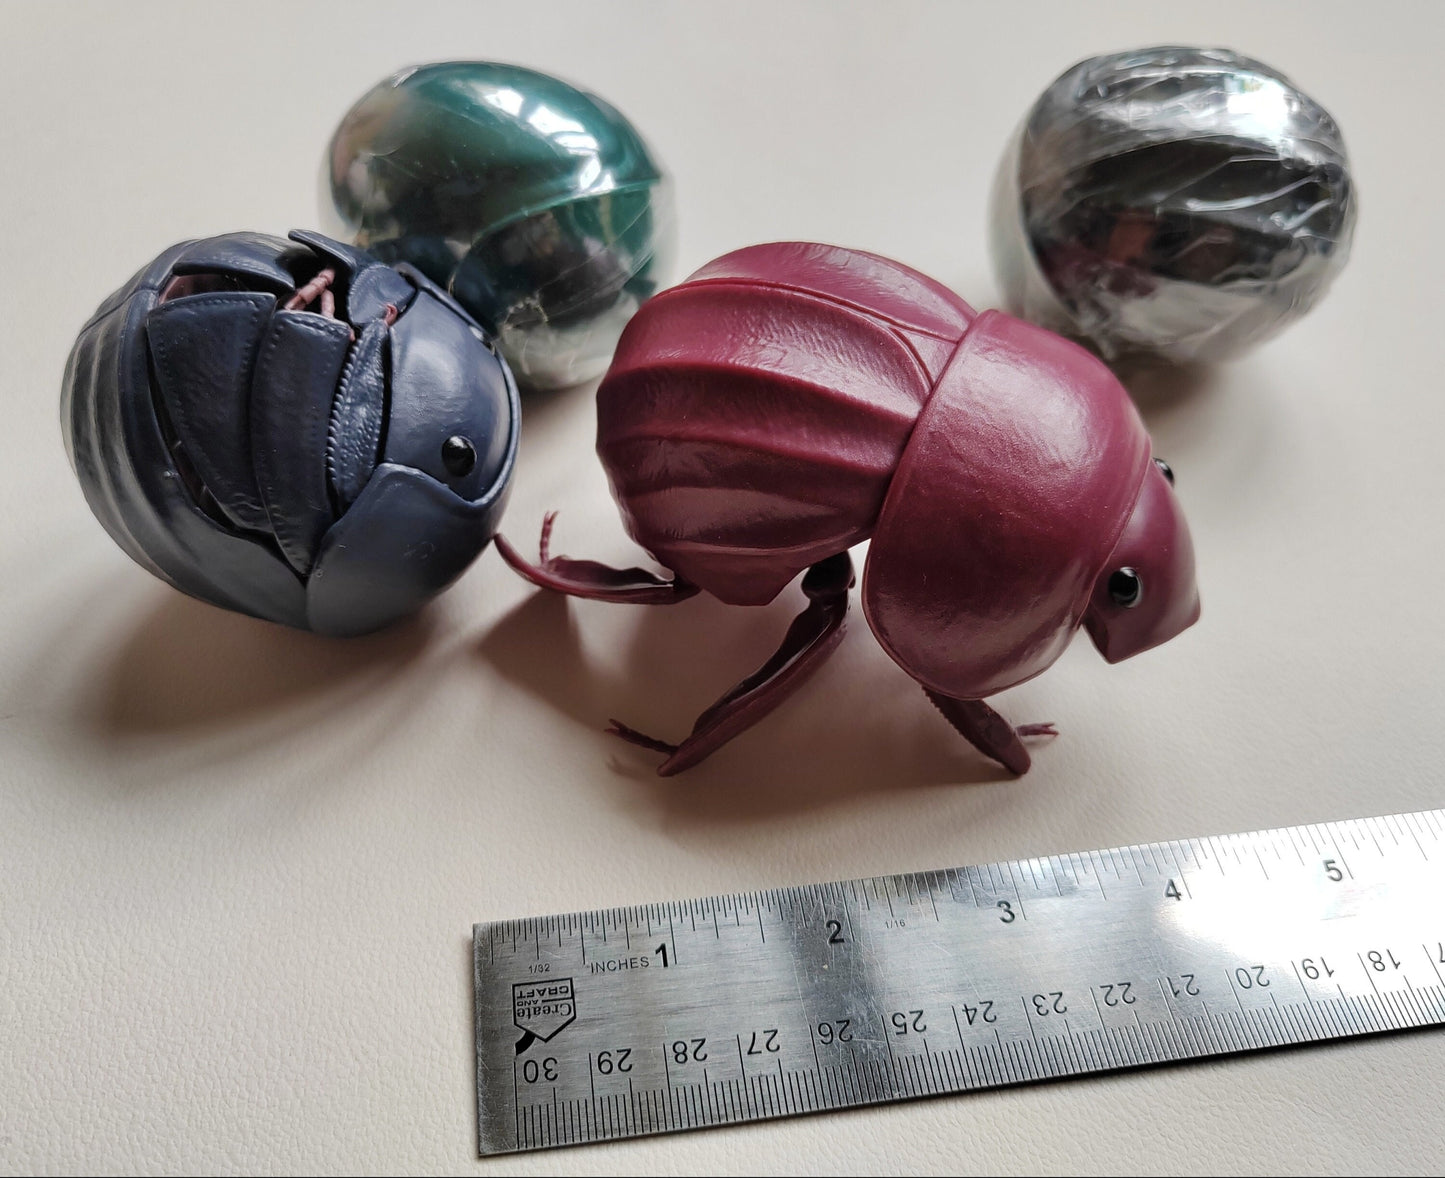 Dung Beetles & Armadillos - Japanese exclusive figures by Bandai